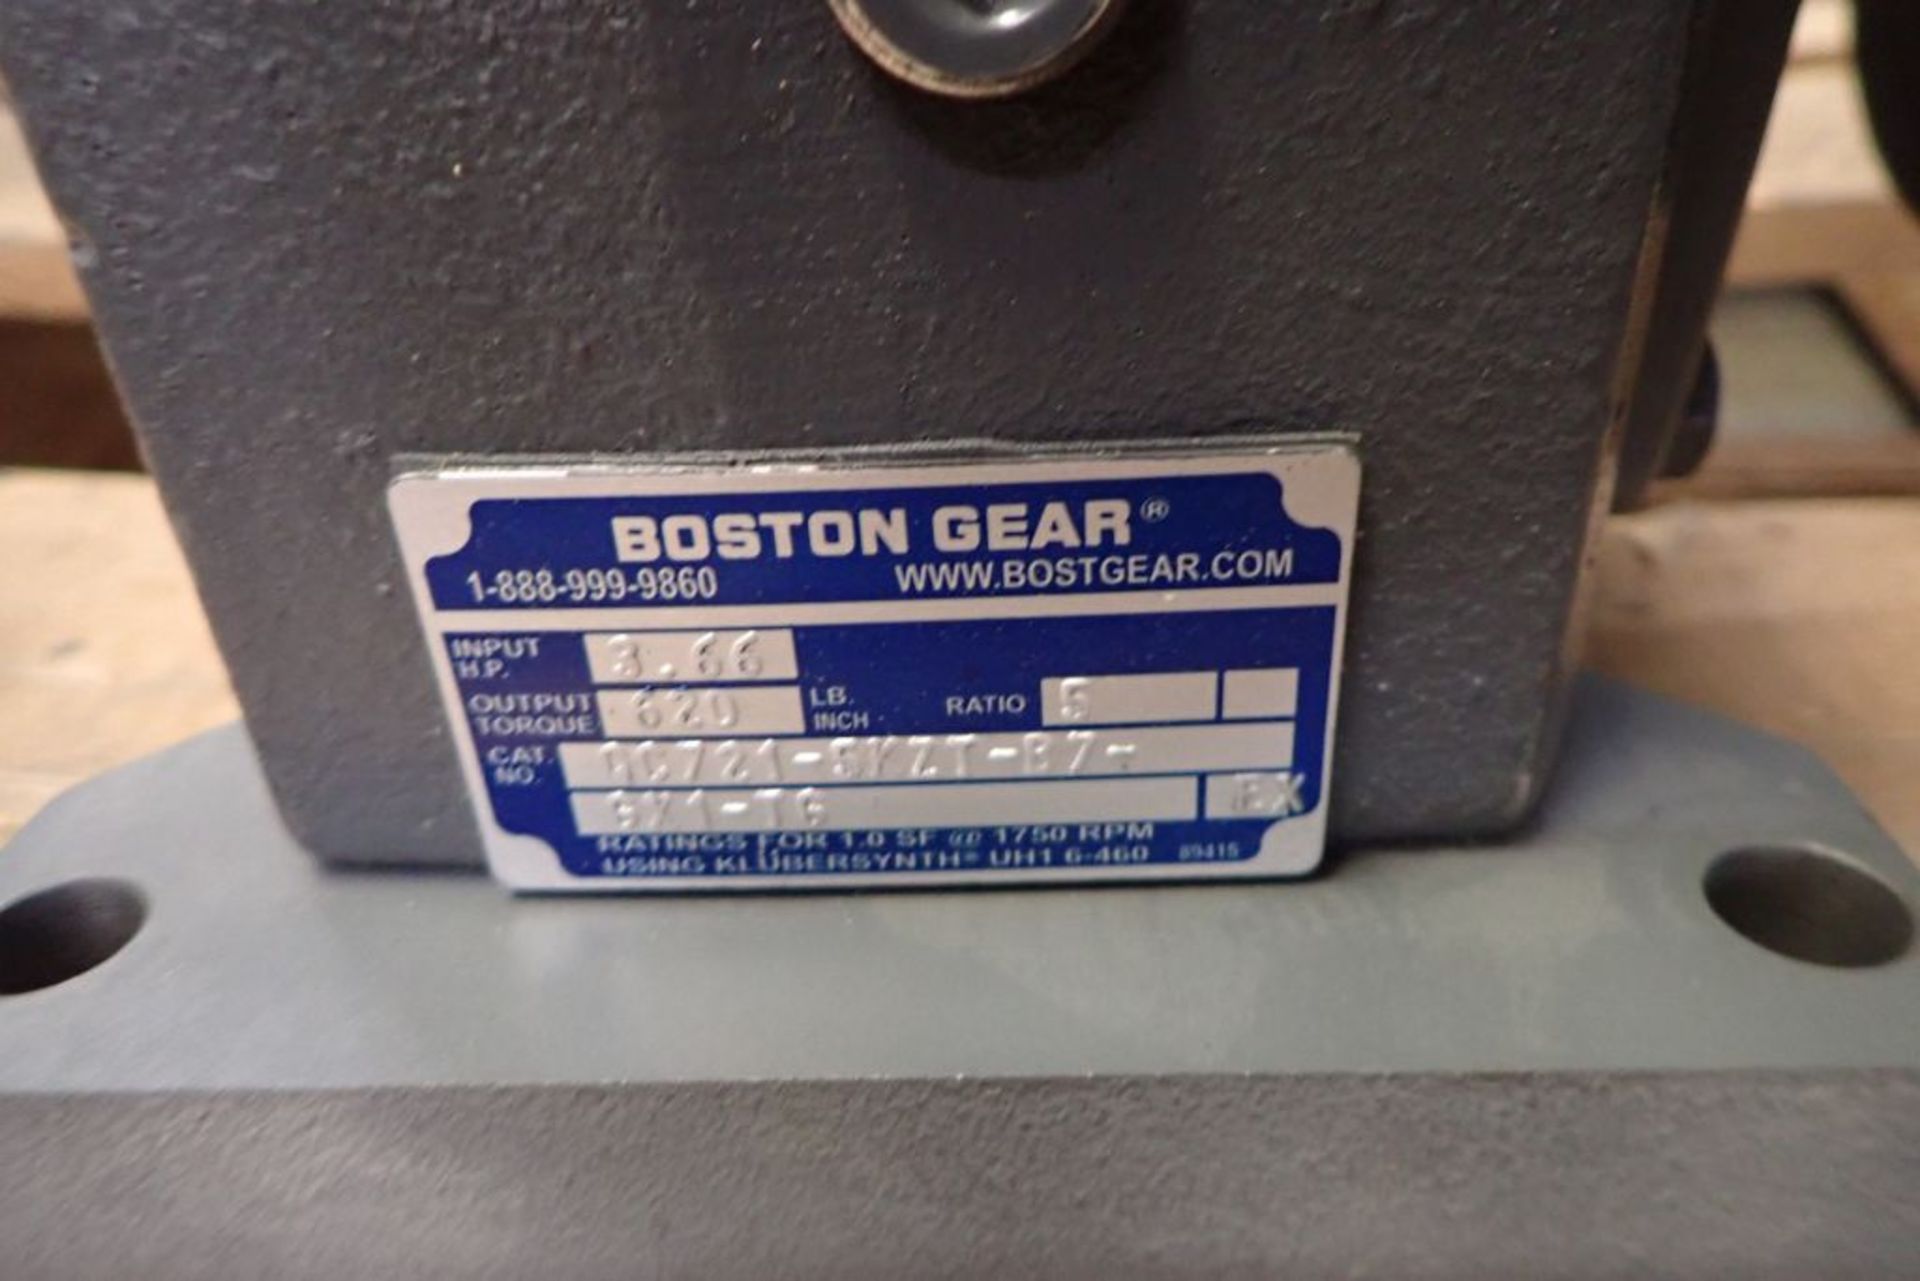 Lot of (2) Baldor Motors with Boston Gear - Image 9 of 11